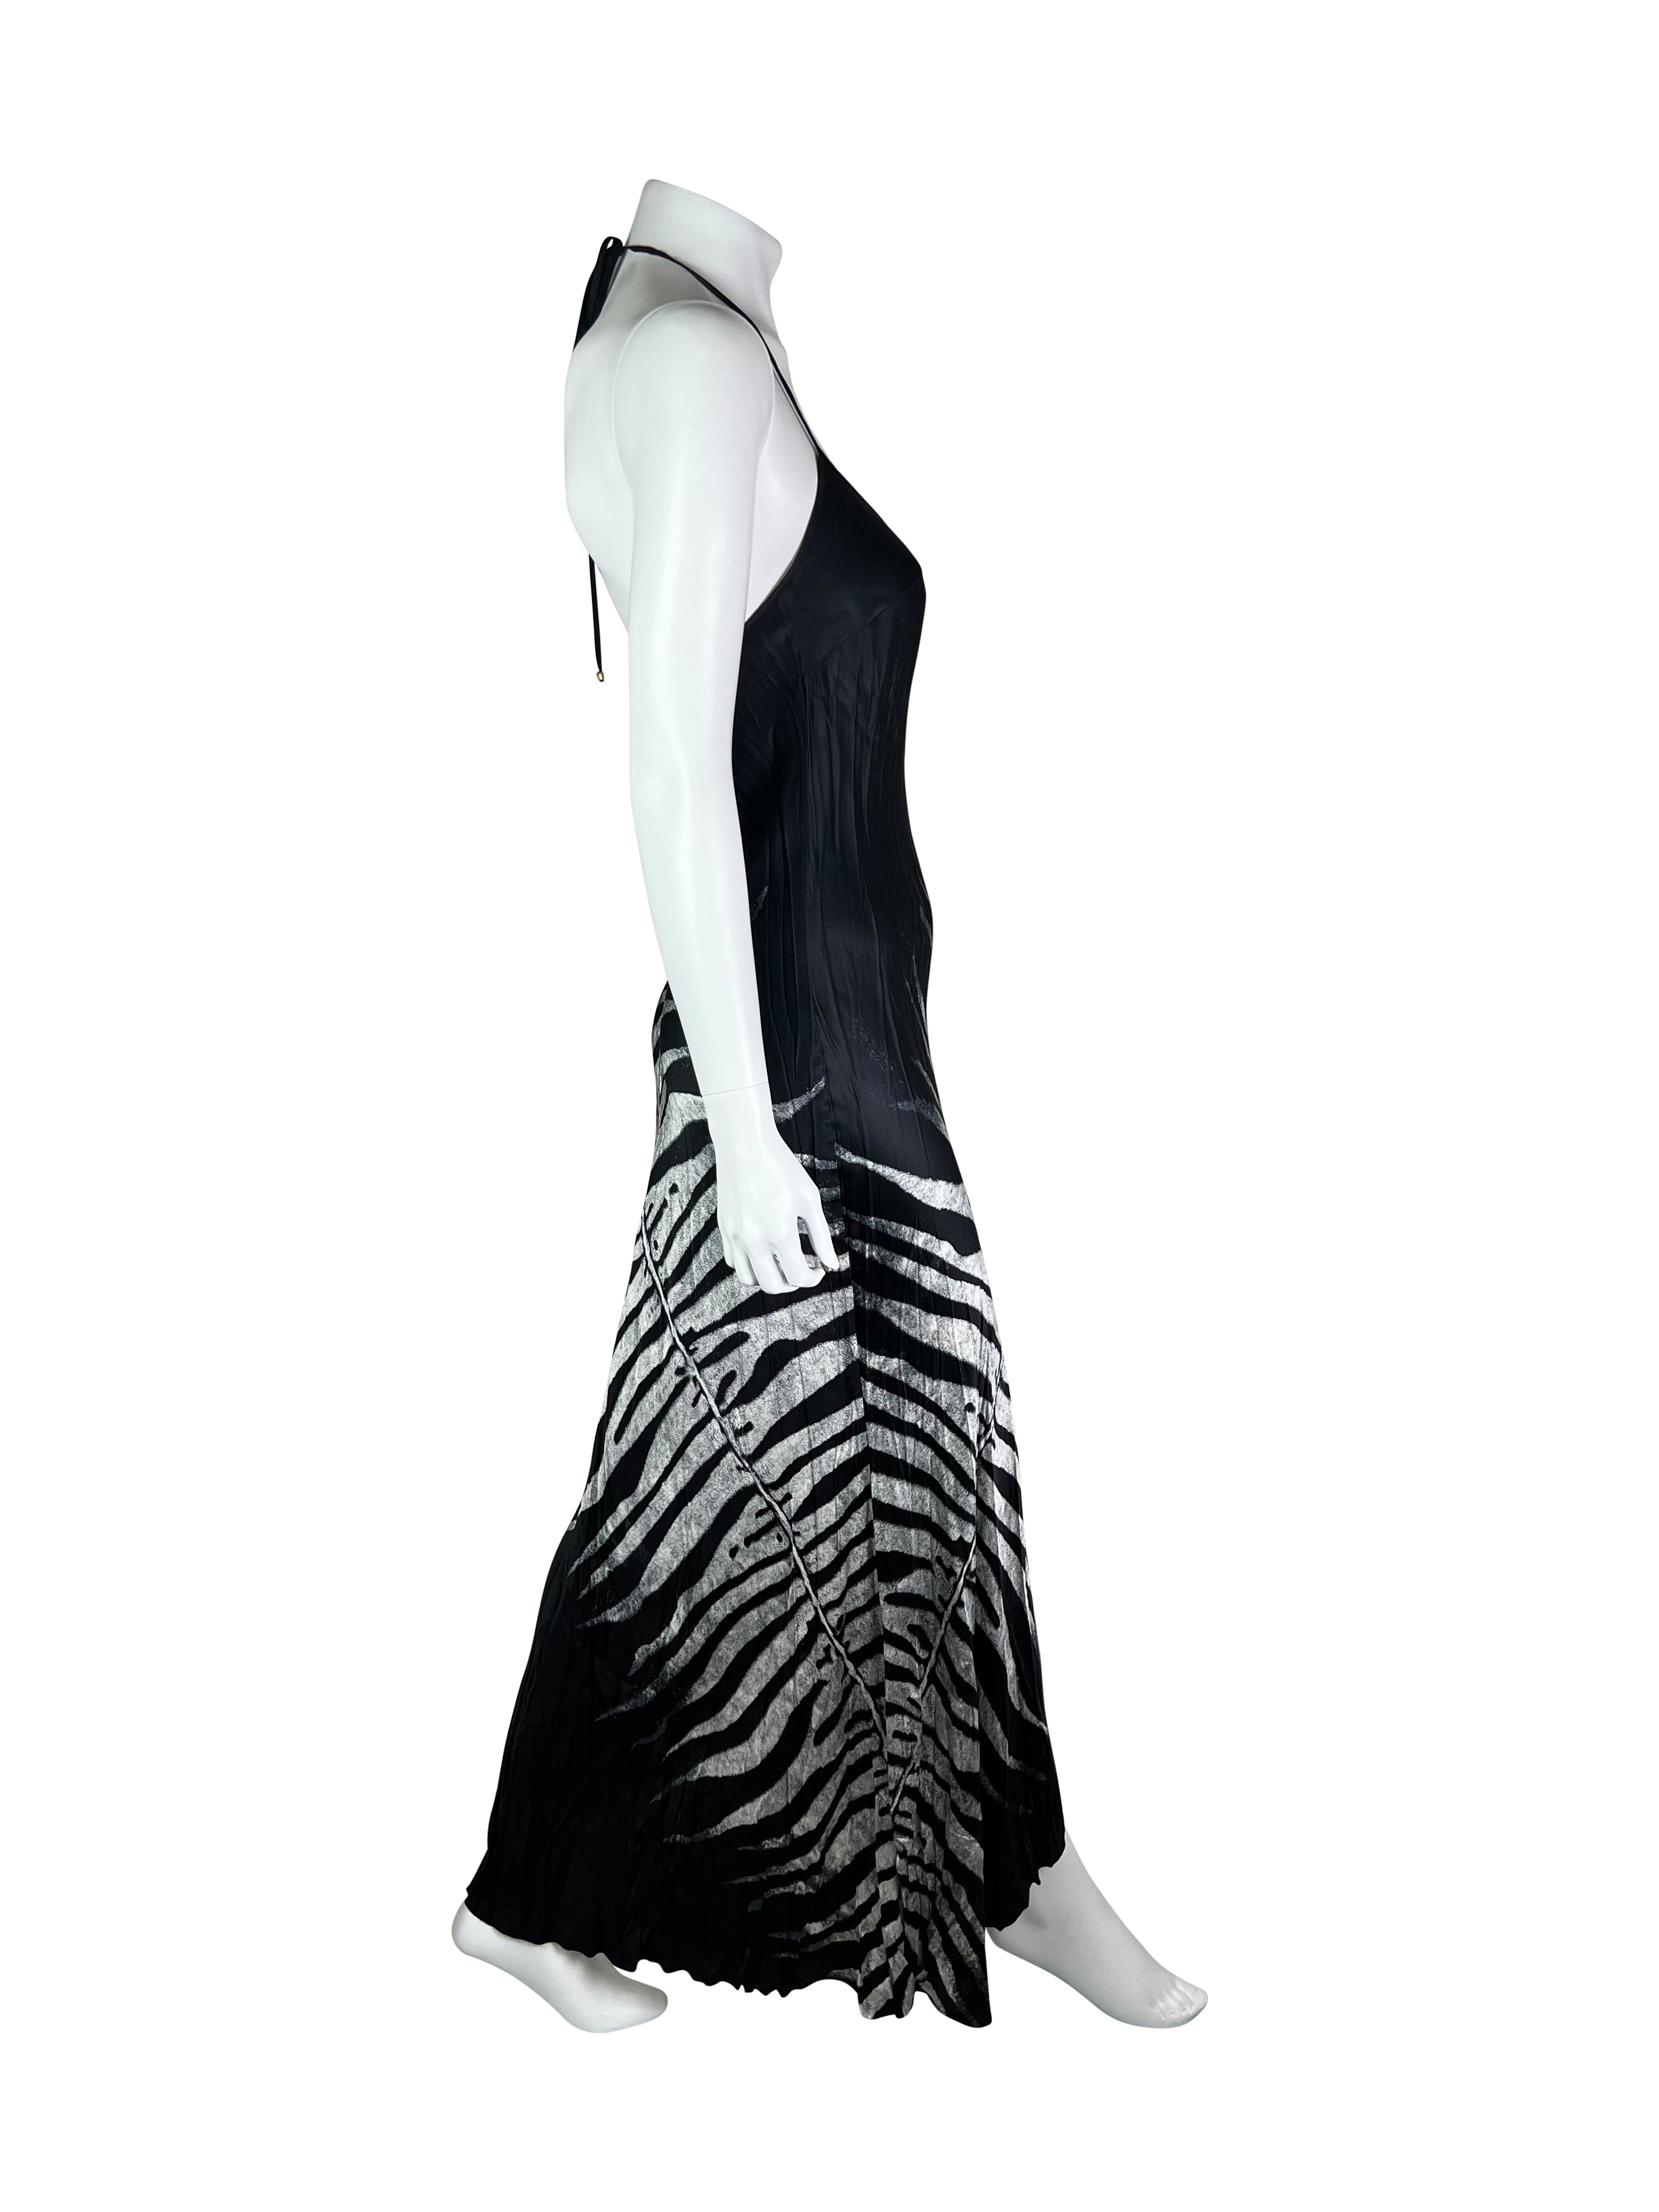 Roberto Cavalli Spring 2000 Printed Silk Dress